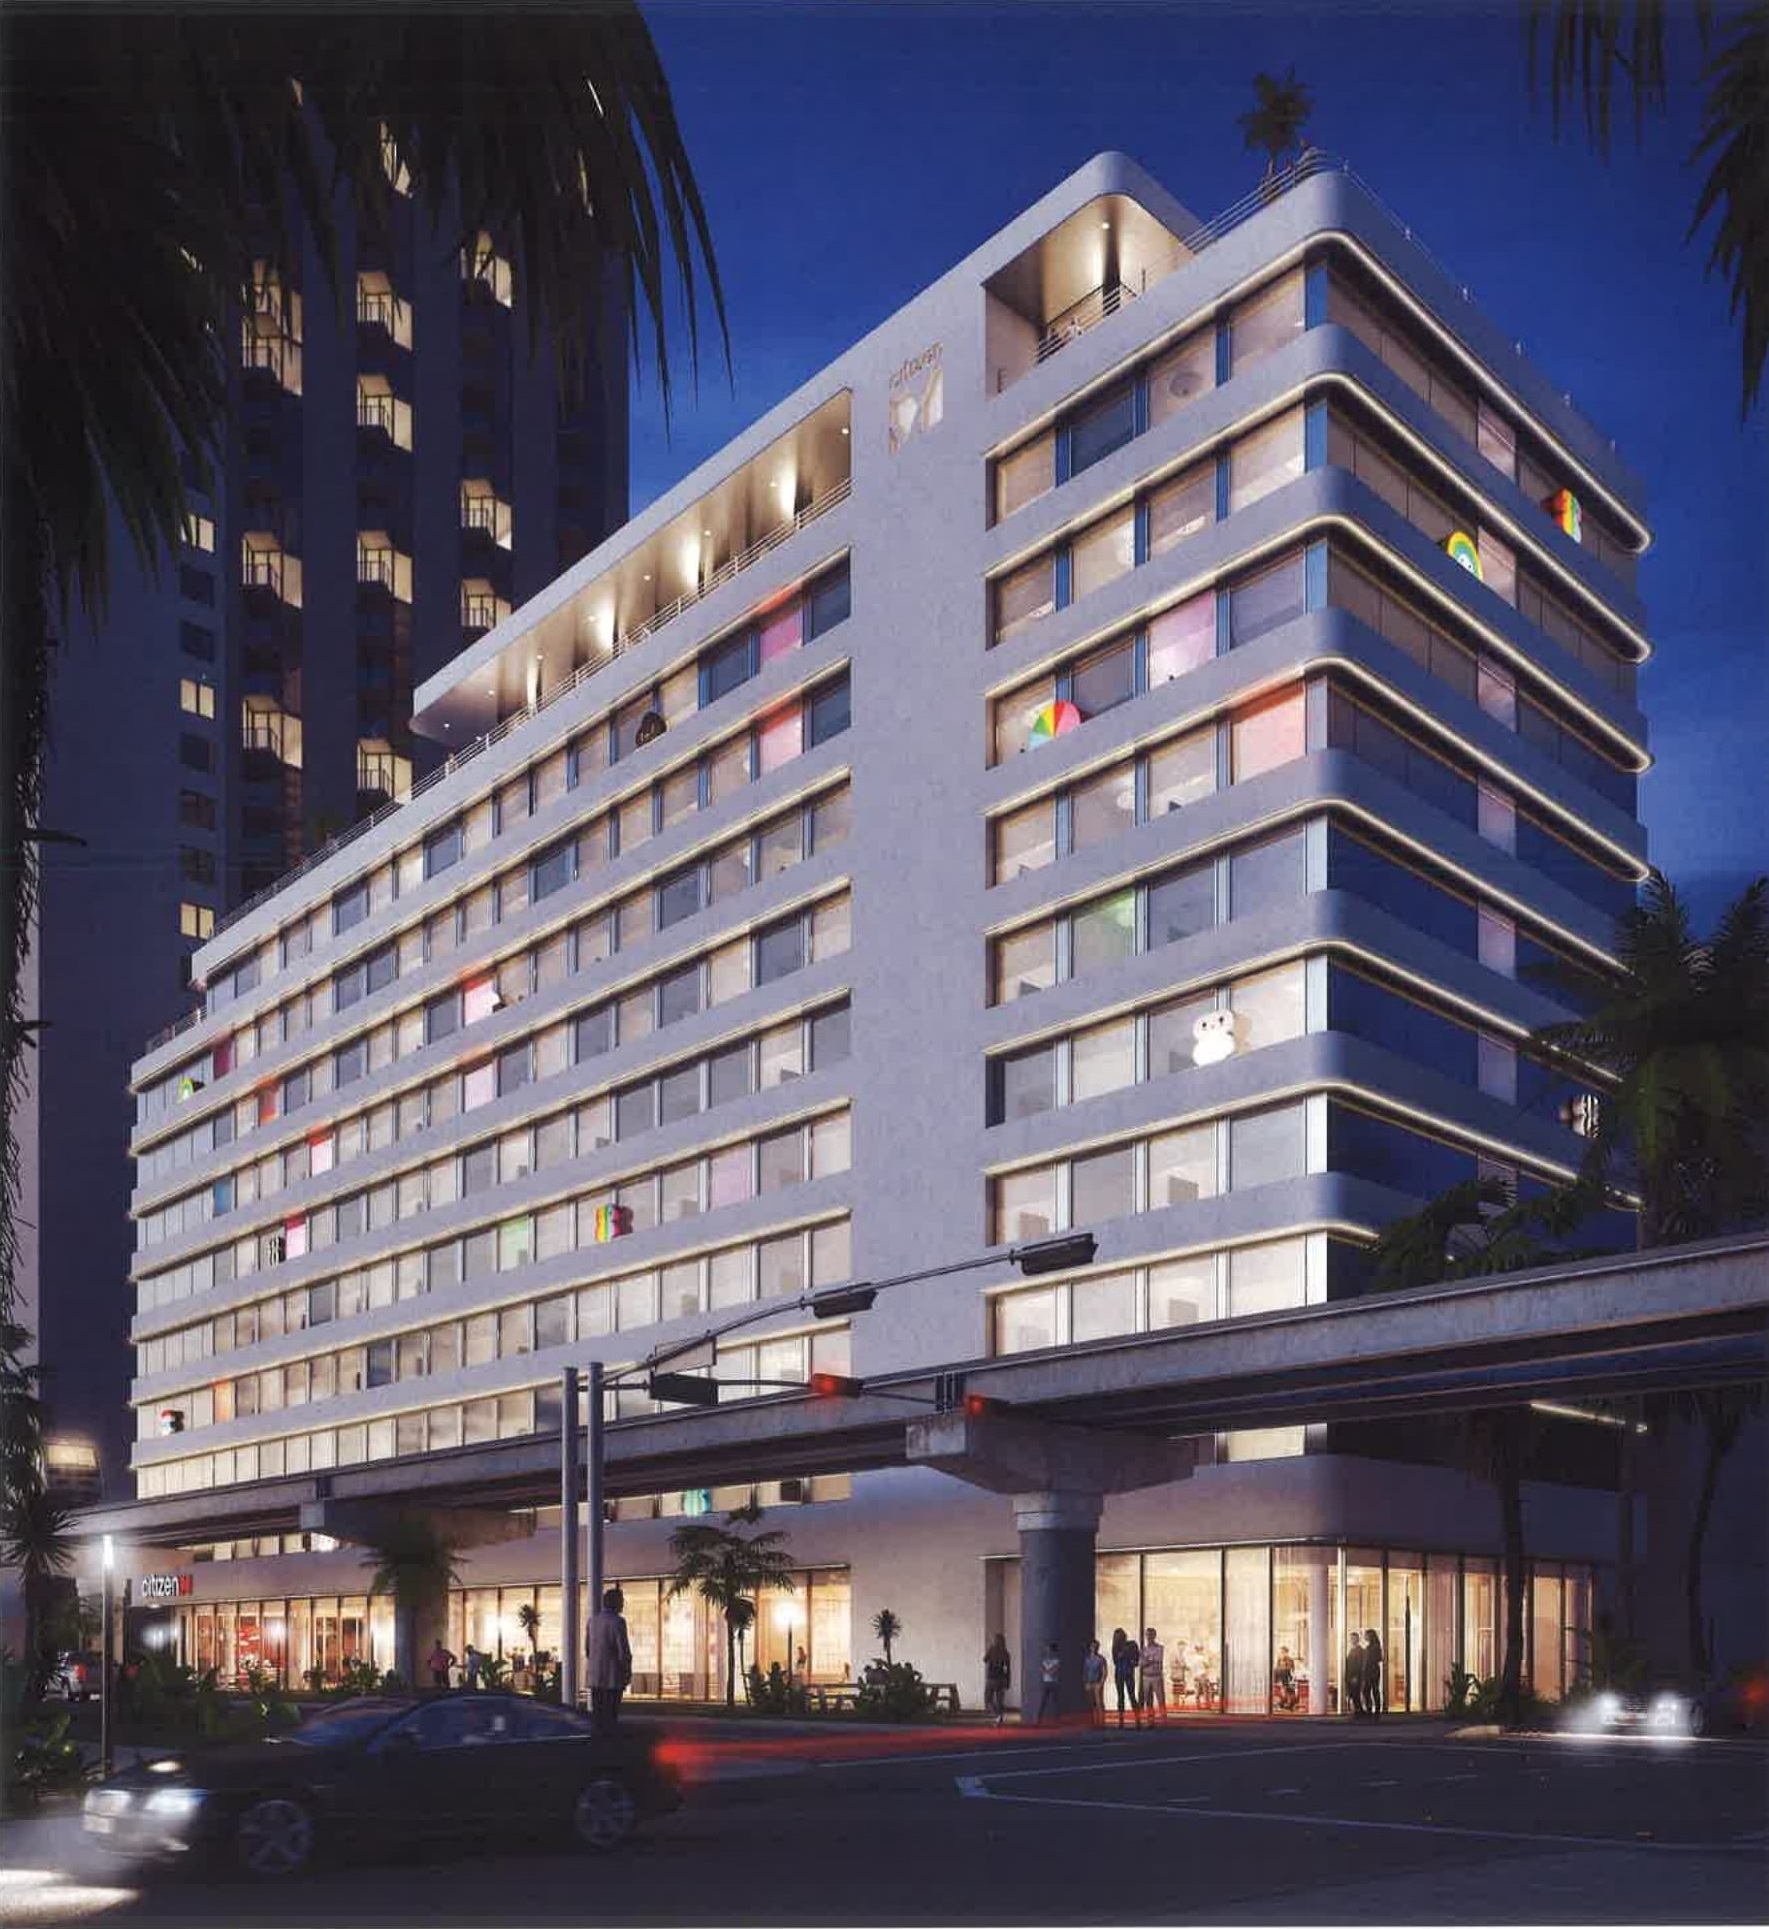 CitizenM Hotel Miami Worldcenter, designed by Gensler. 